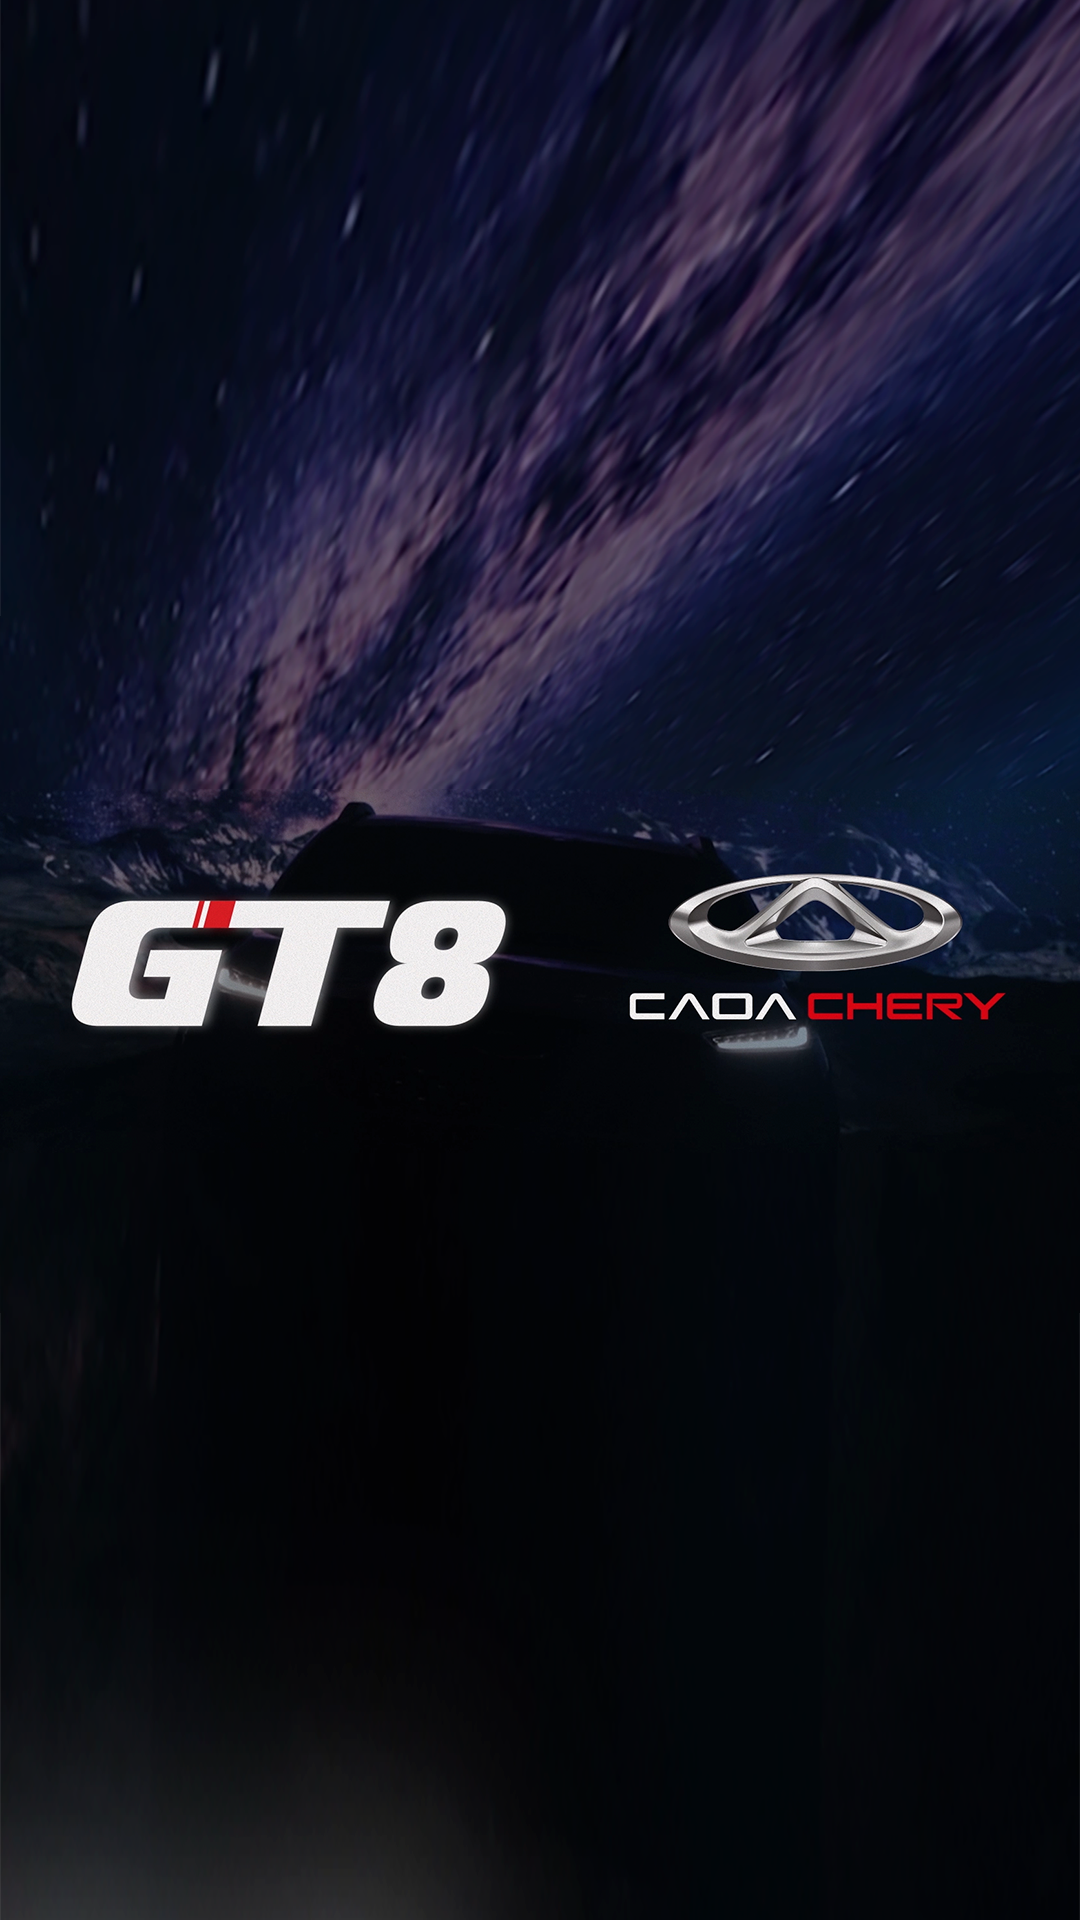 GT8 Caoa Chery